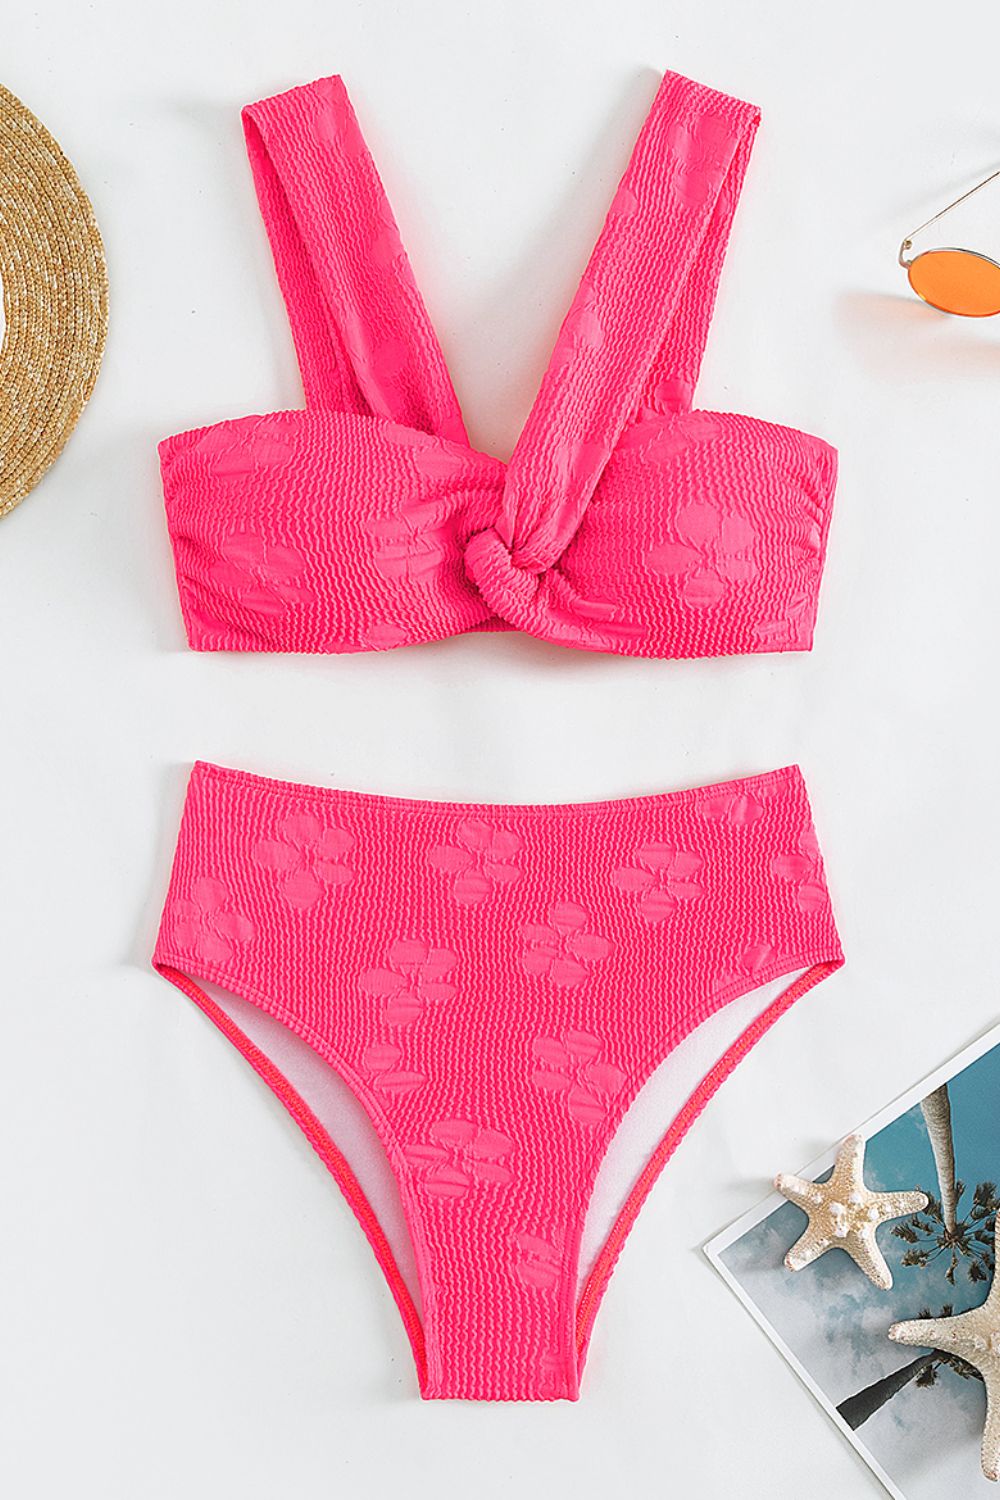 Textured High-Waist Twist Bikini Set Hot Pink